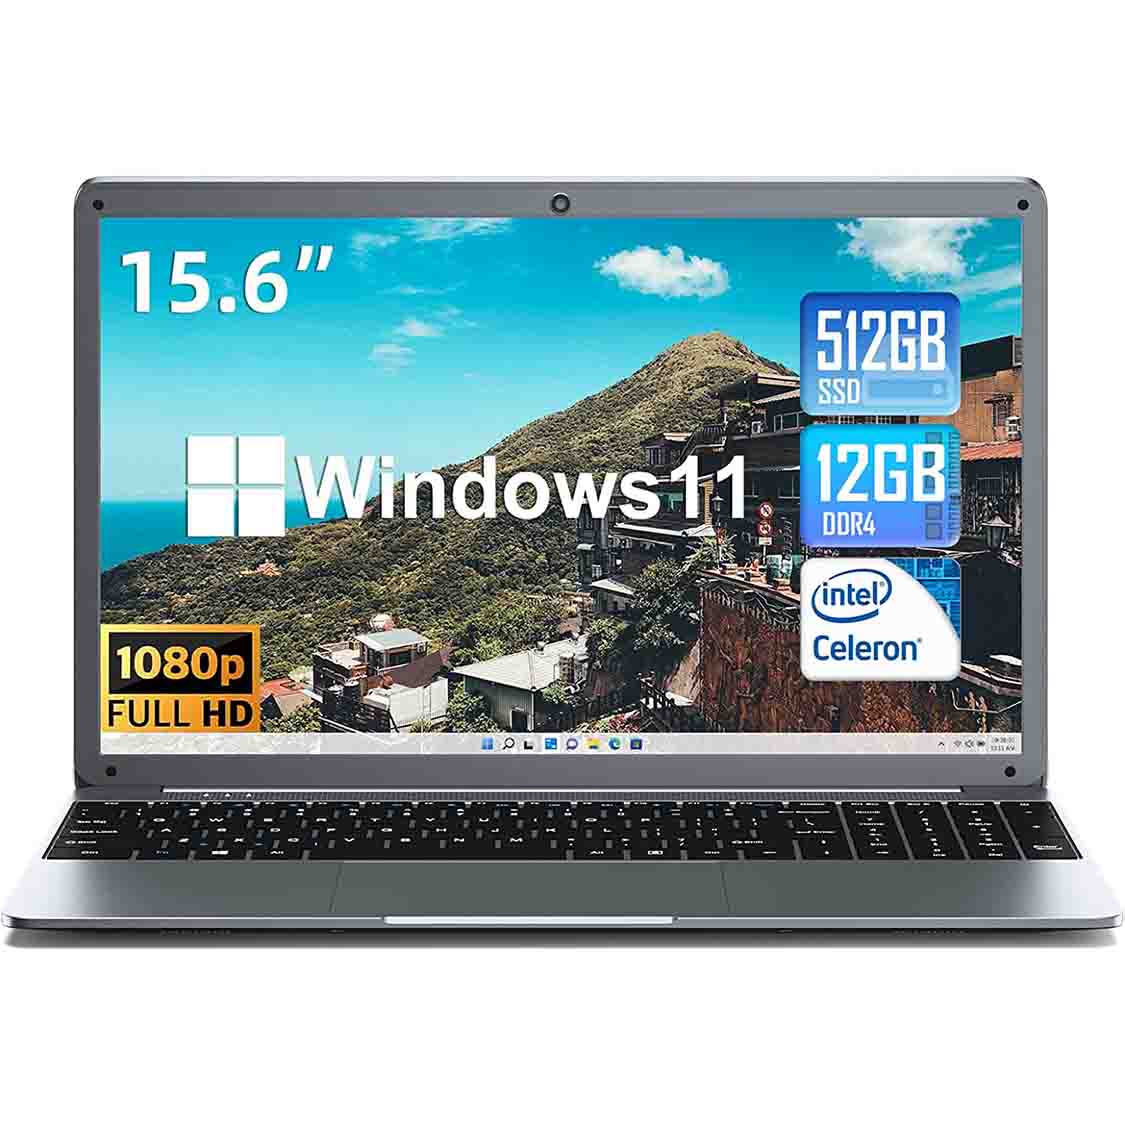 laptop open displaying windows home screen